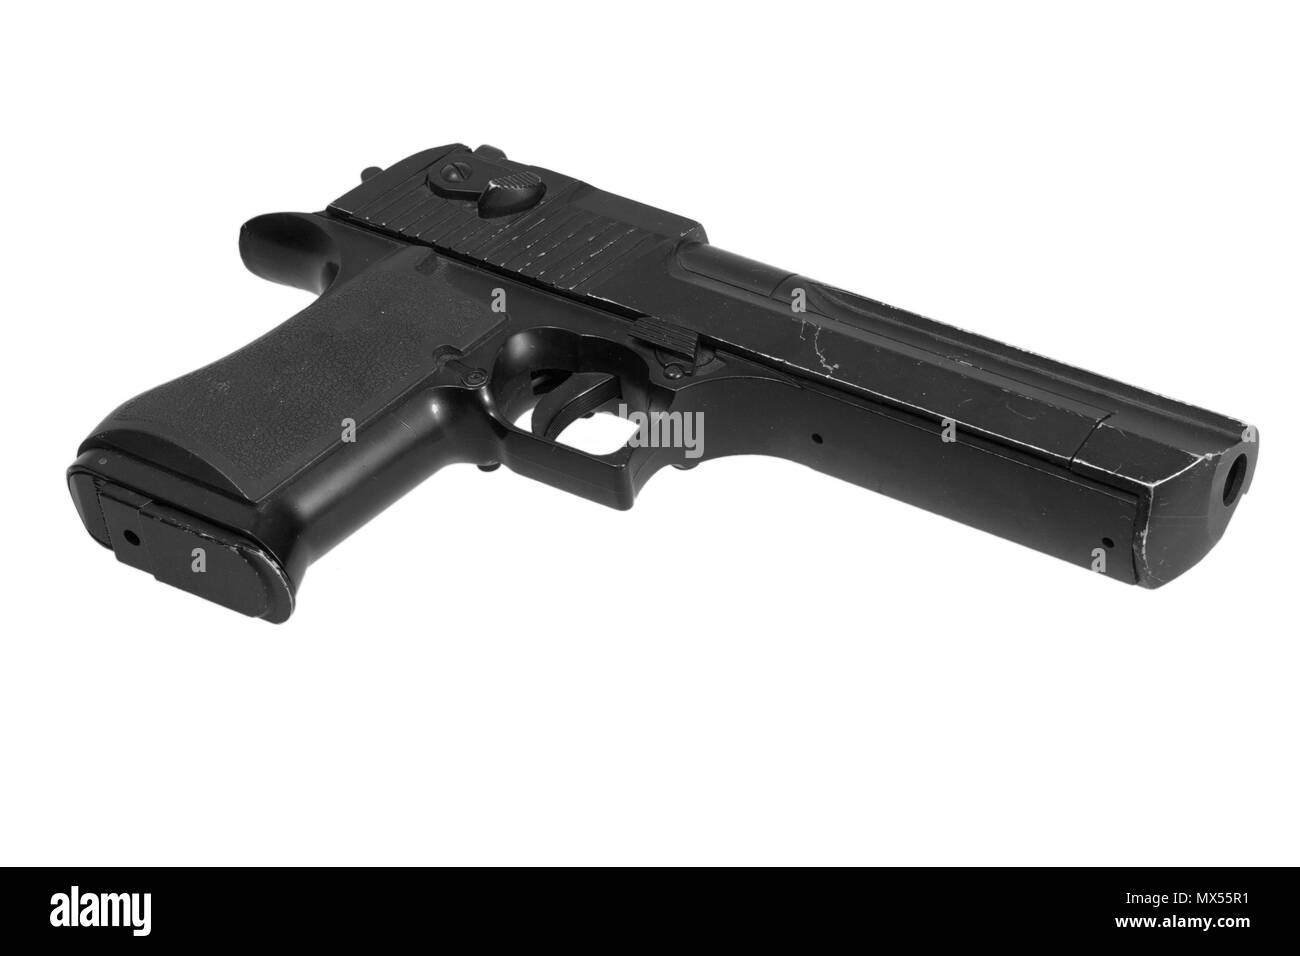 desert eagle handgun pistol isolated on a white background Stock Photo